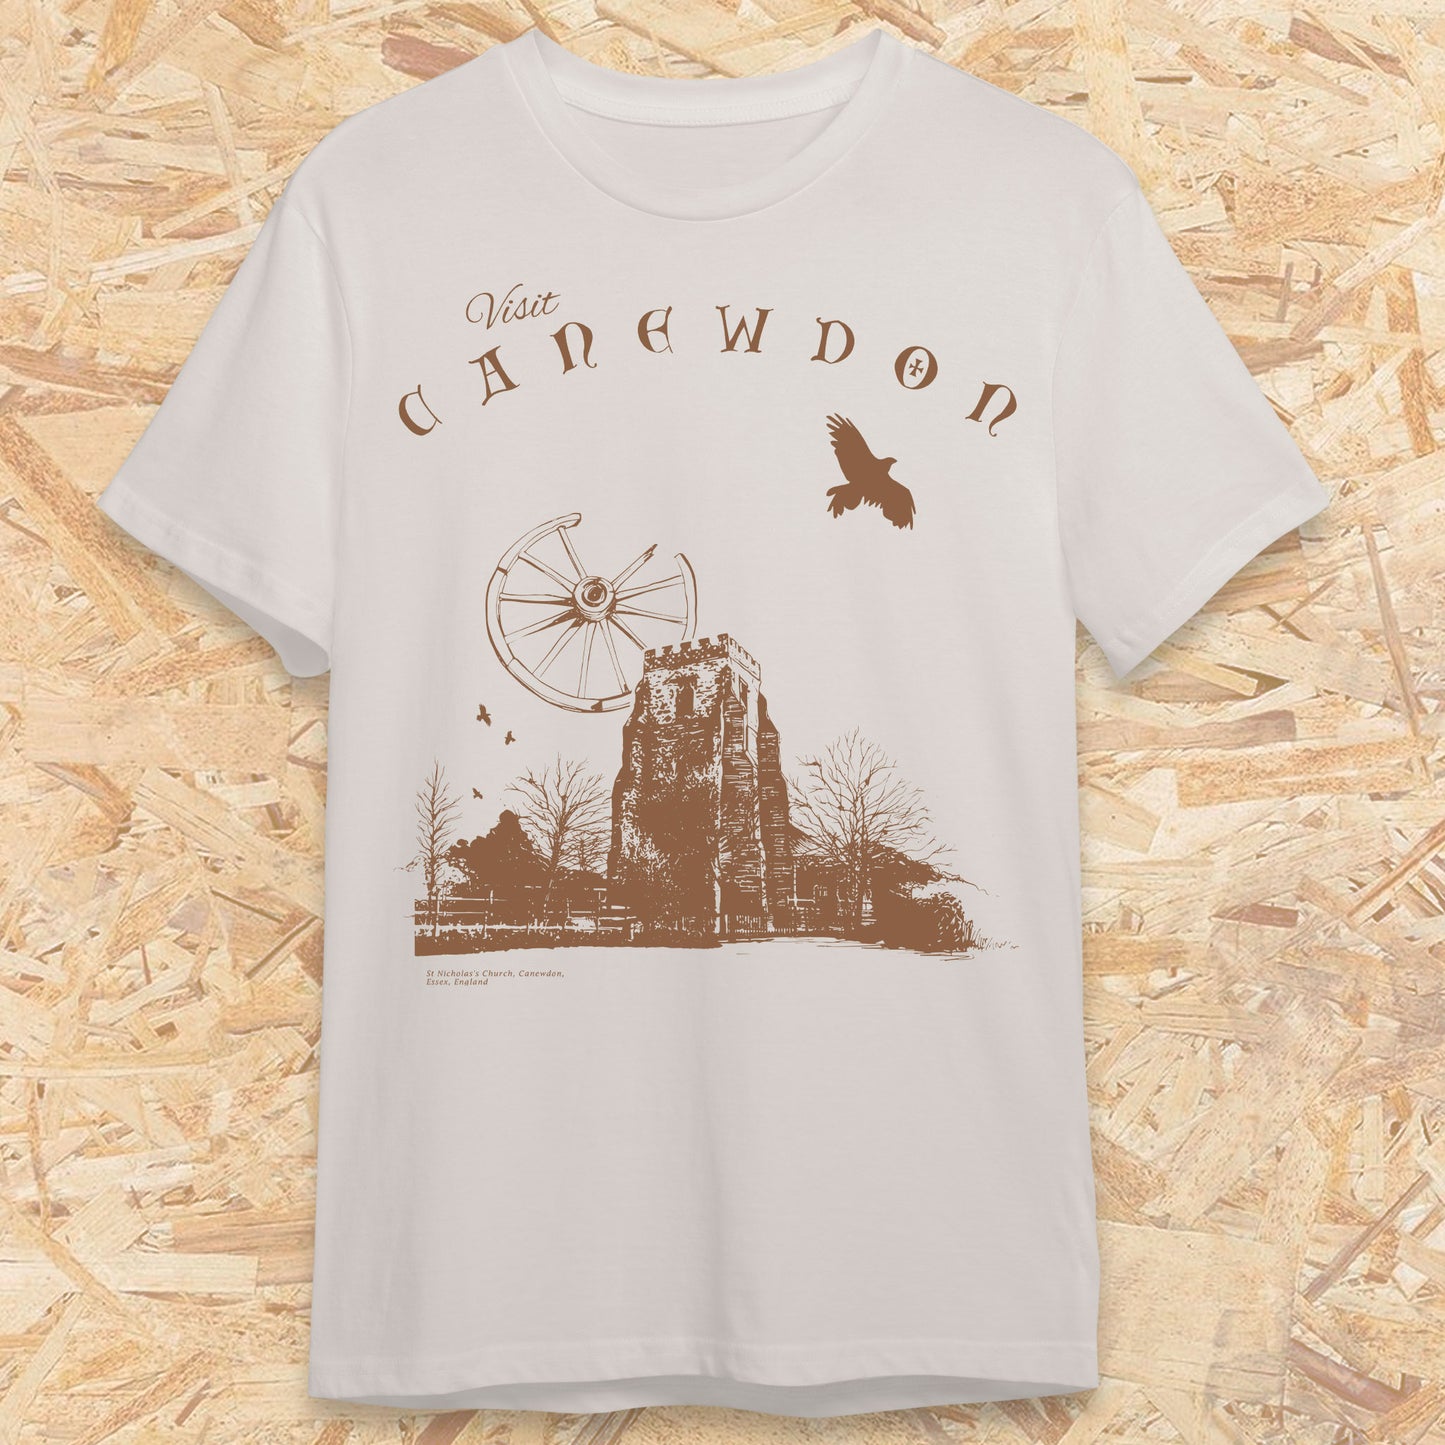 Visit Canewdon T-Shirt